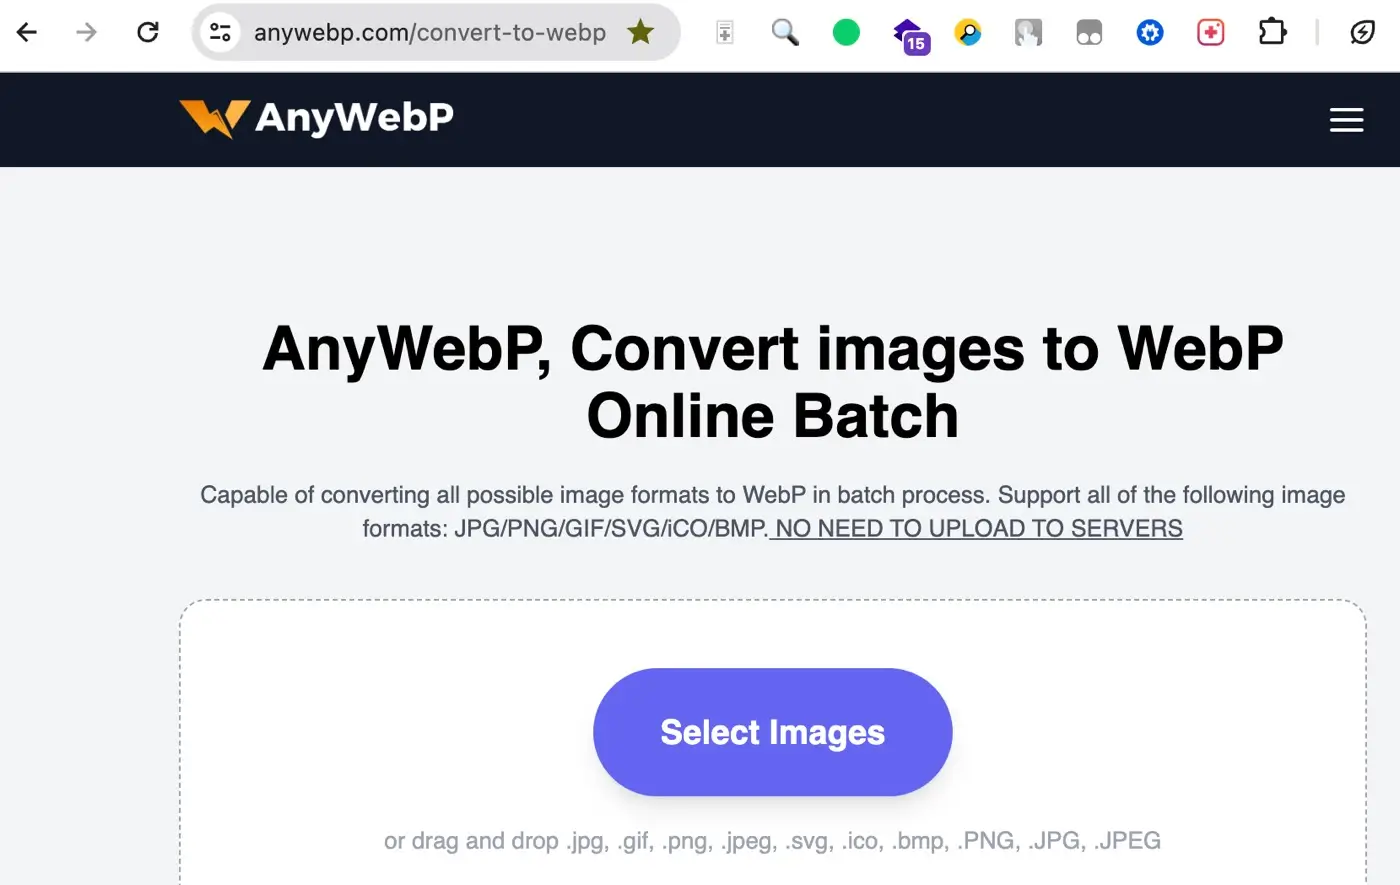 Upload images to convert into WebP in bulk